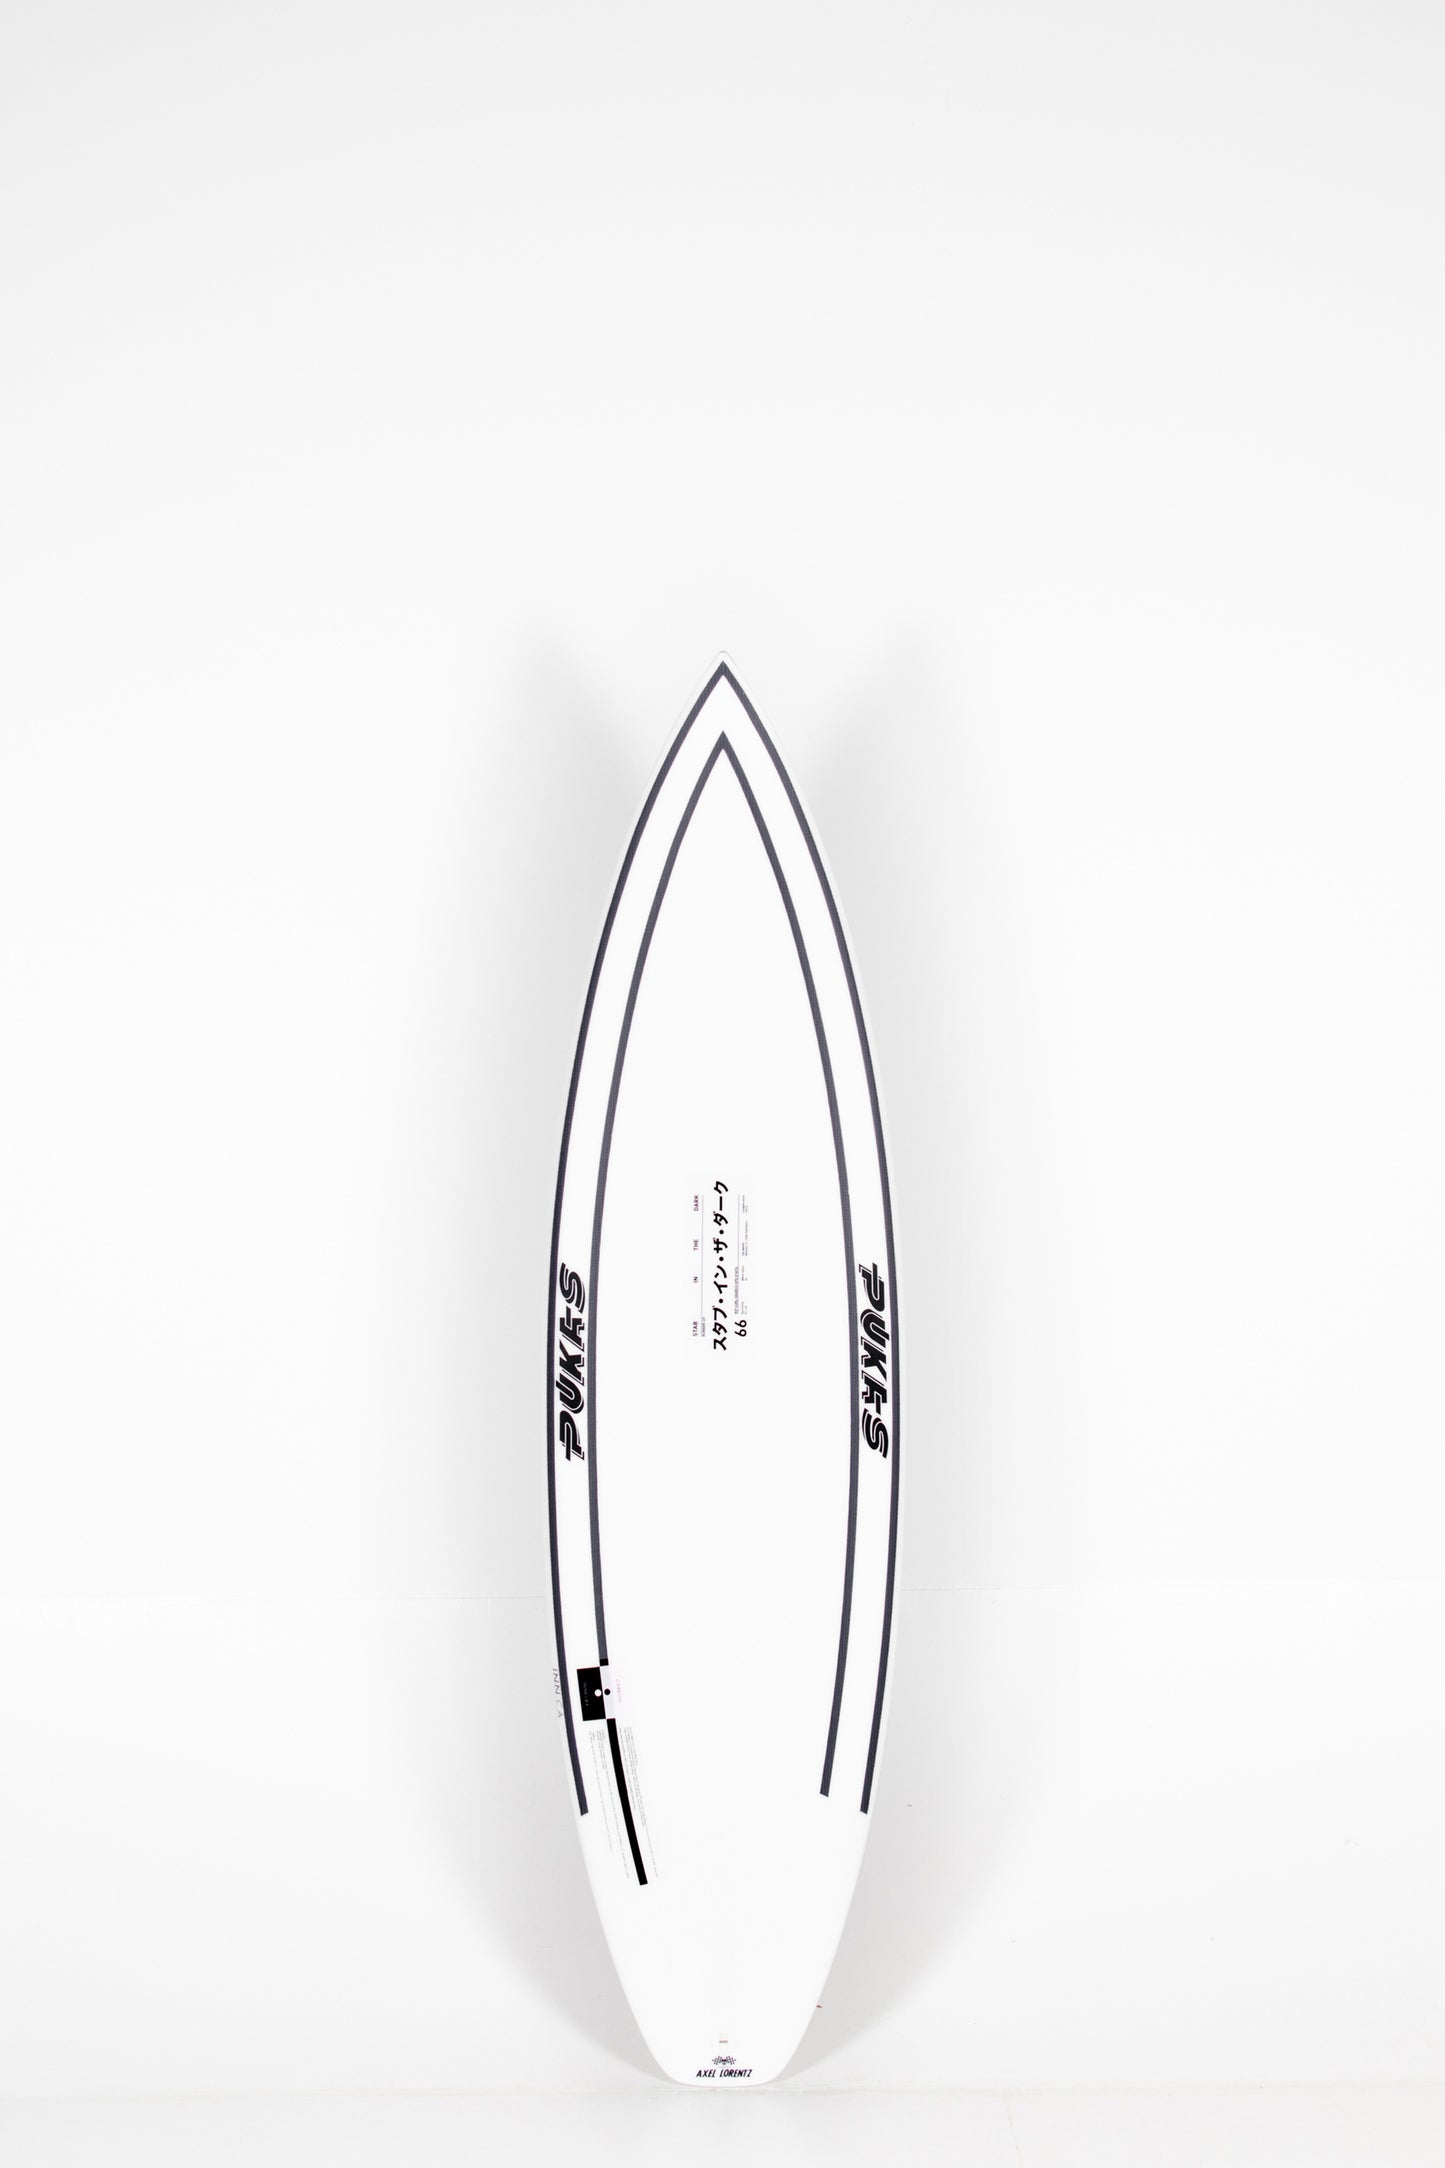 
                  
                    Pukas Surfboard - INNCA Tech - DARK HP by Axel Lorentz - 6’0” 1/2 x 19 x 2,3 - 28,3L
                  
                